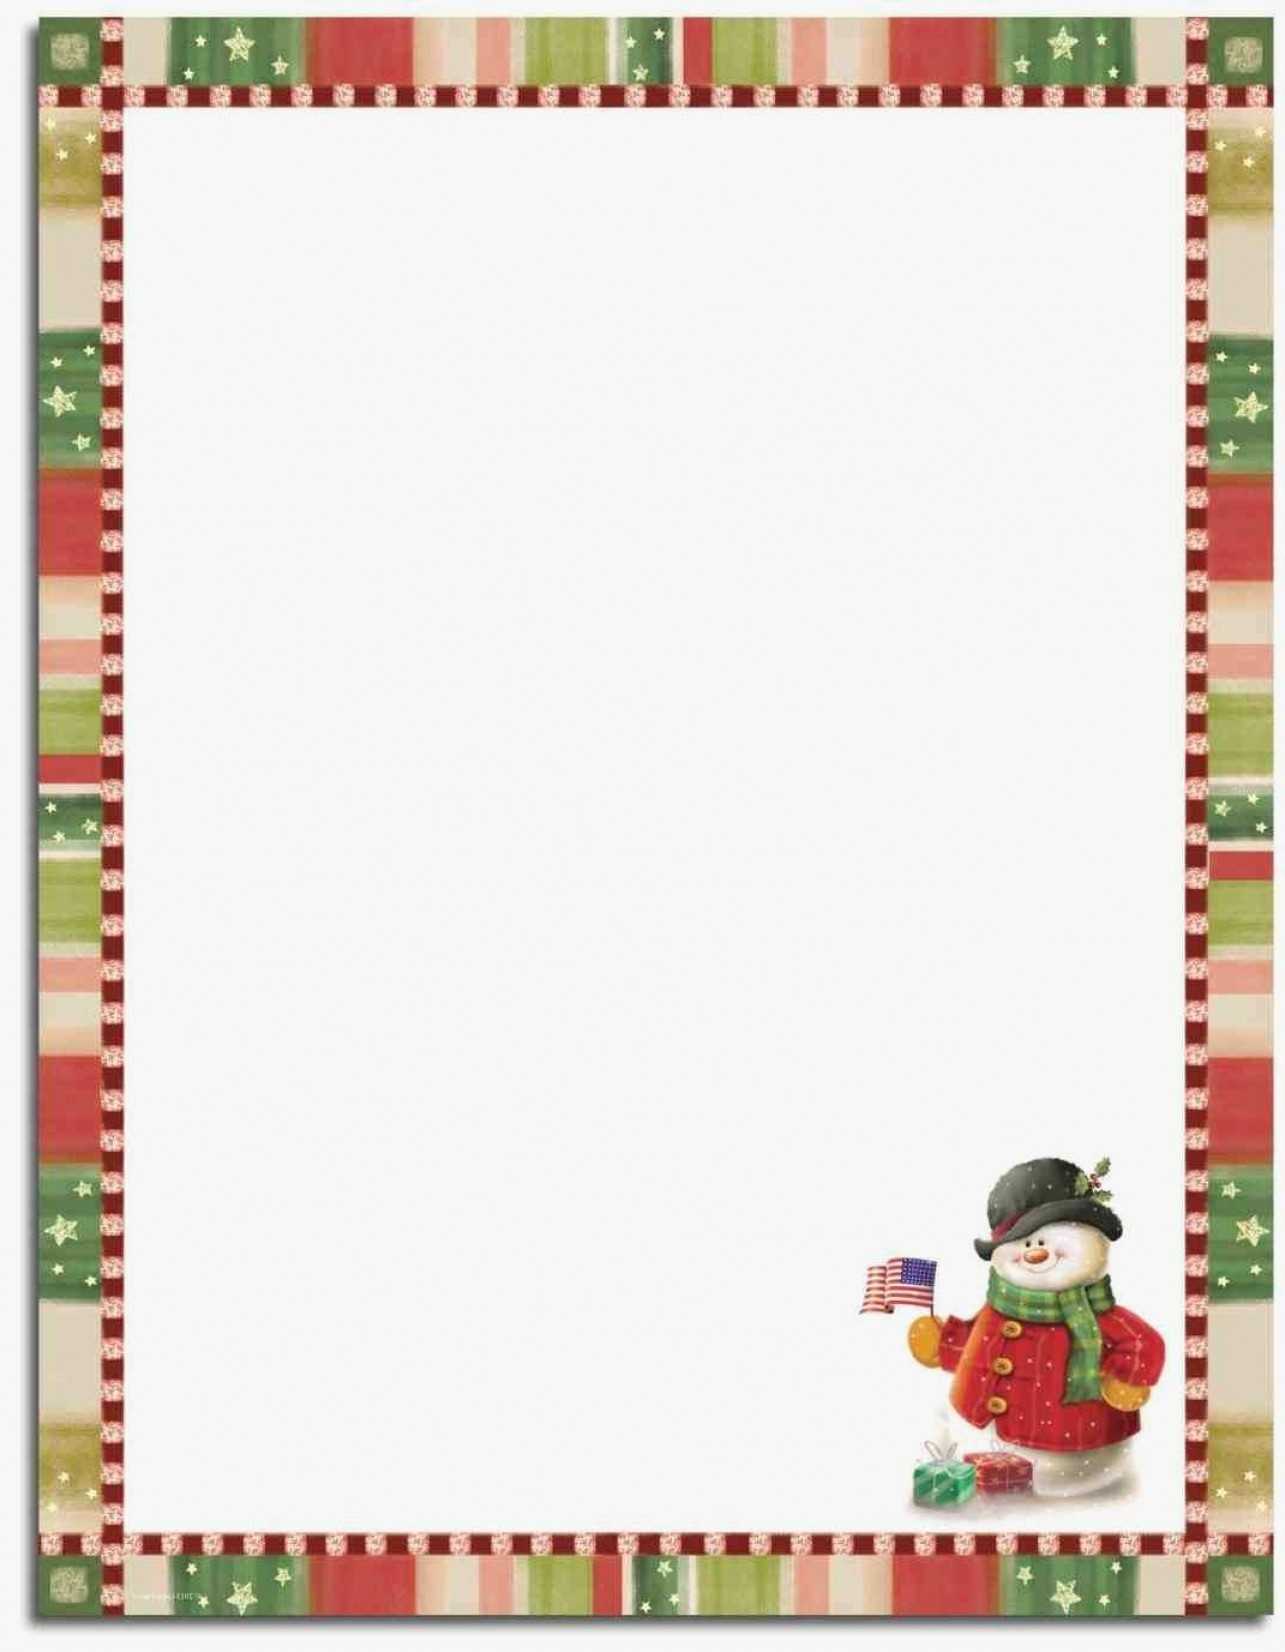 Printable Clip Art Free Christmas Border Templates For Word Intended For Christmas Border Word Template